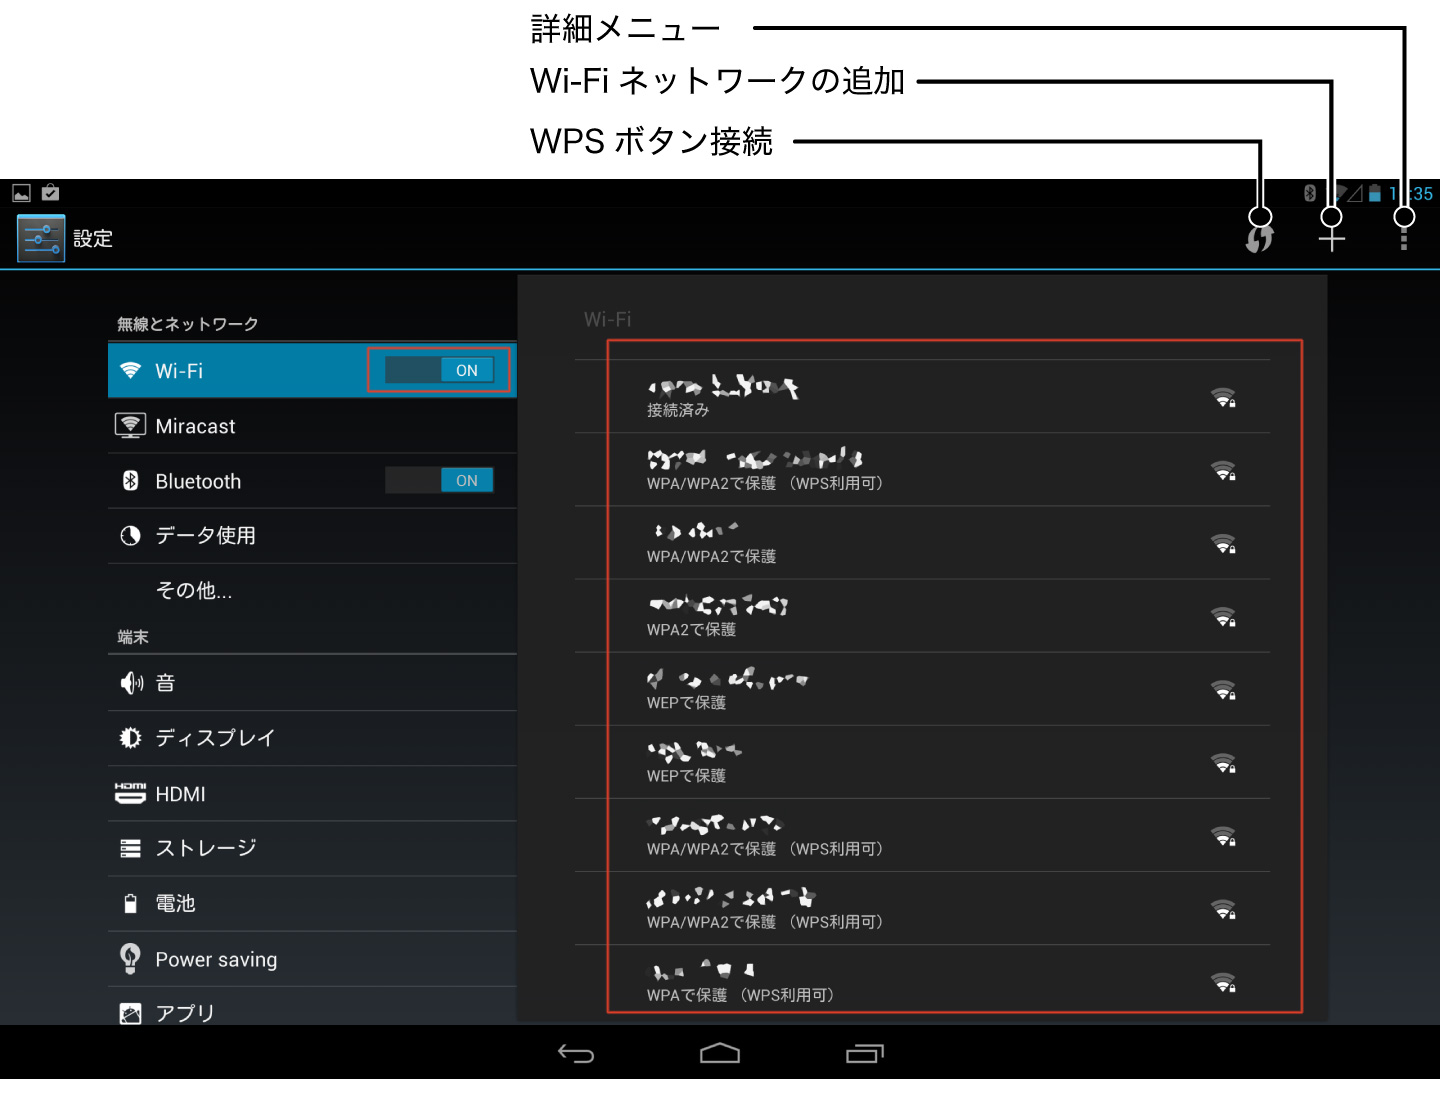 Wi-Fi」設定 | Android 4.2 タブレット マニュアル制作事例